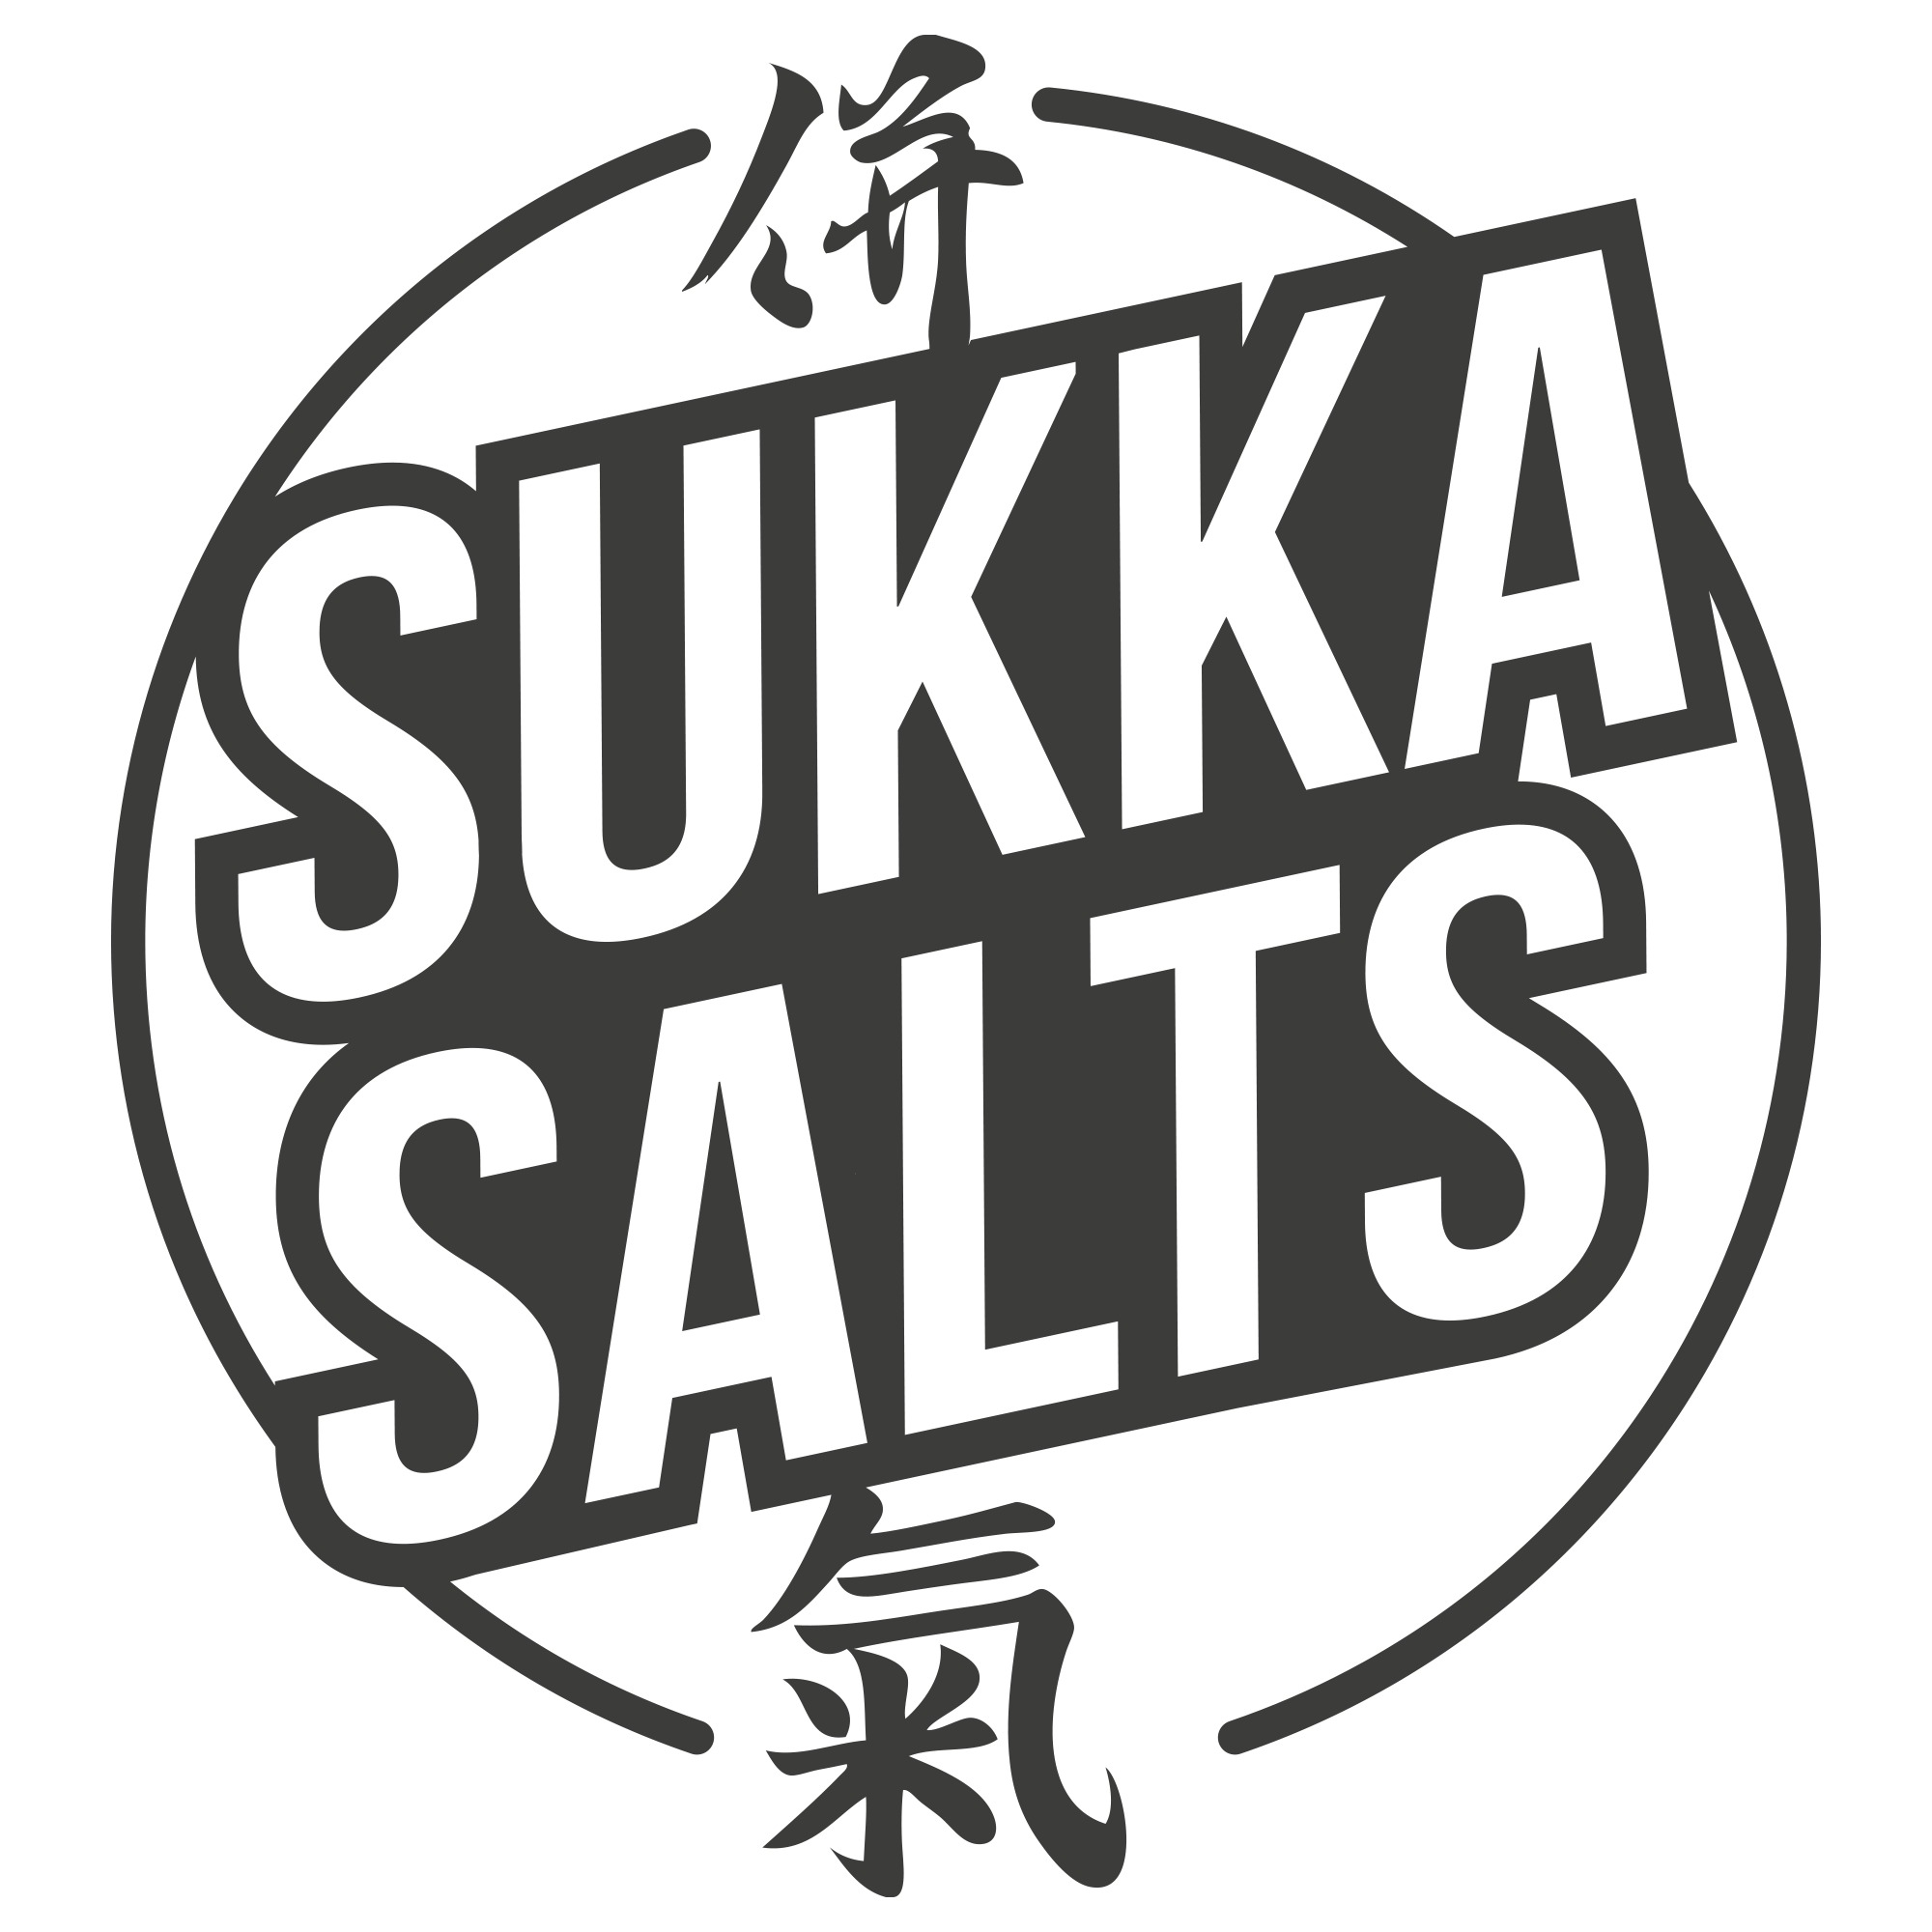 Lichid Sukka Salts